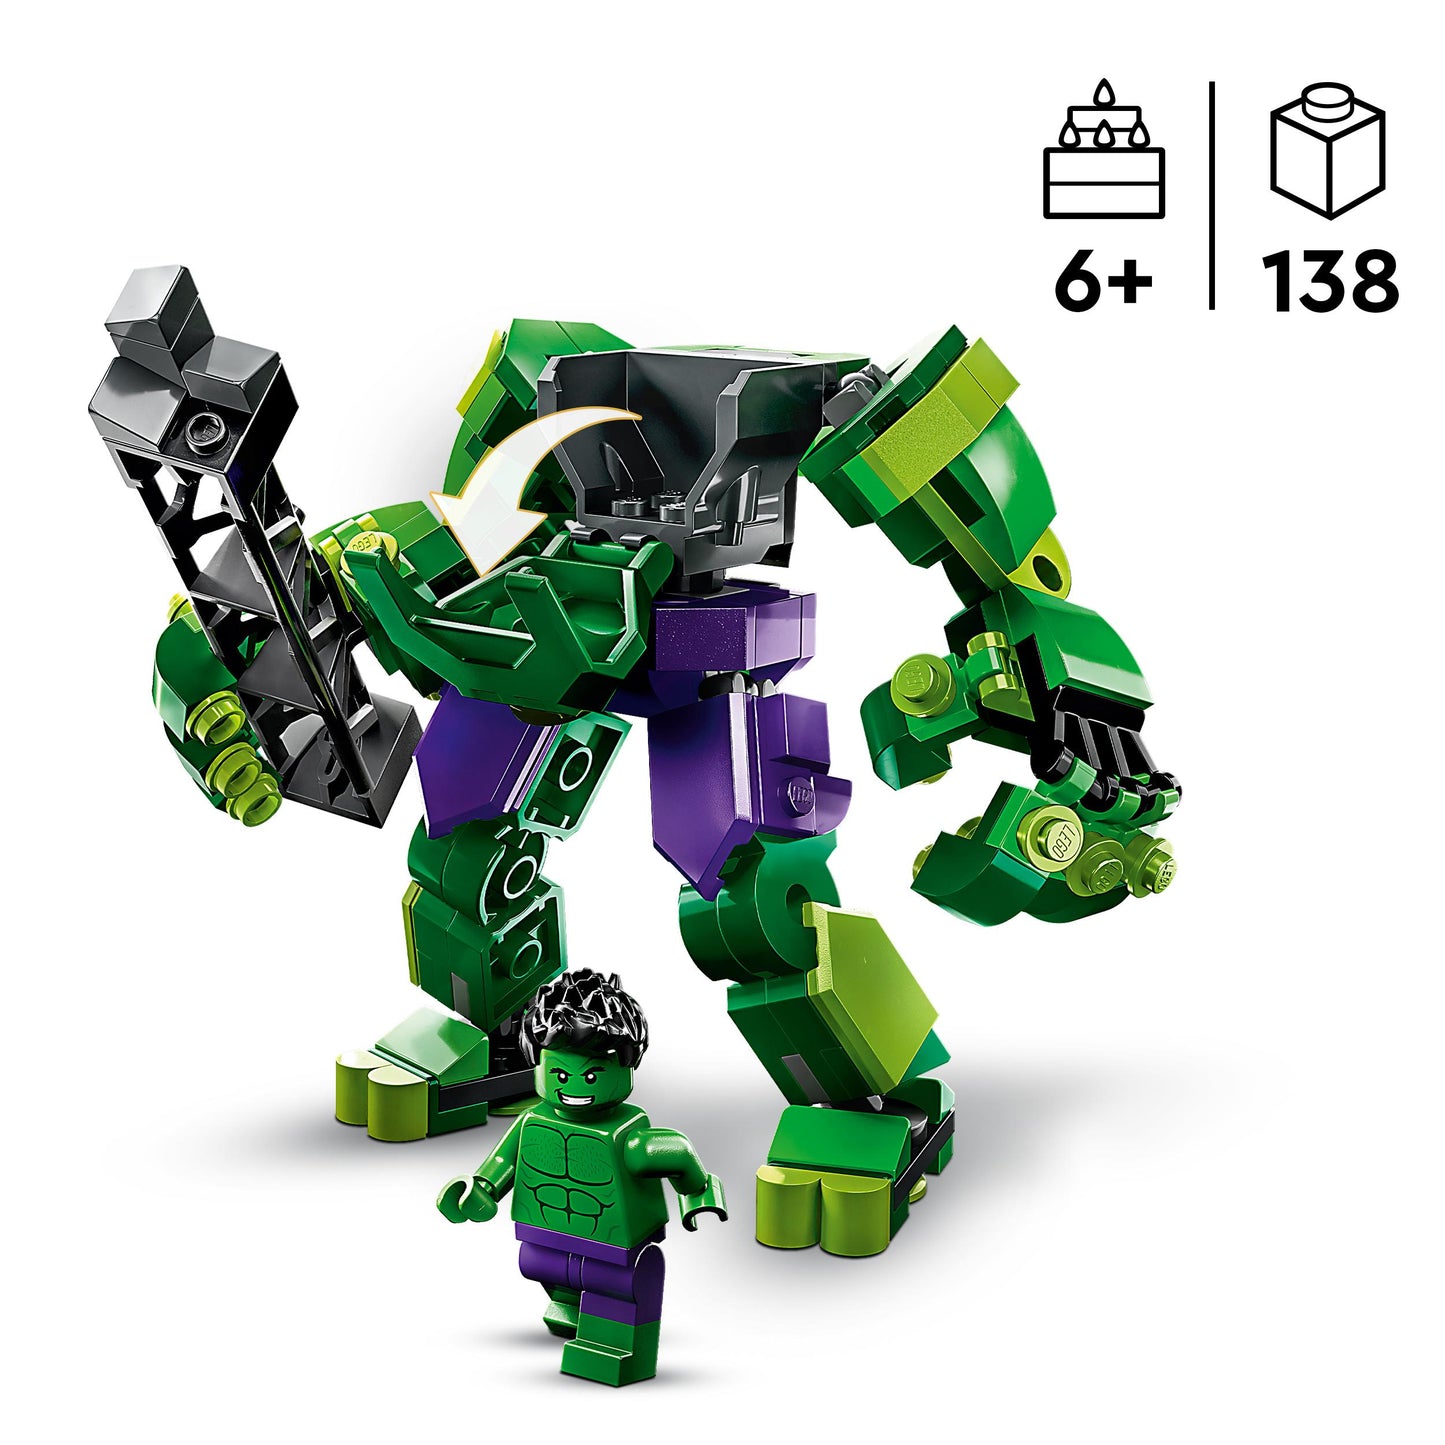 76241 LEGO Marvel Super Heroes - Armatura Mech Hulk